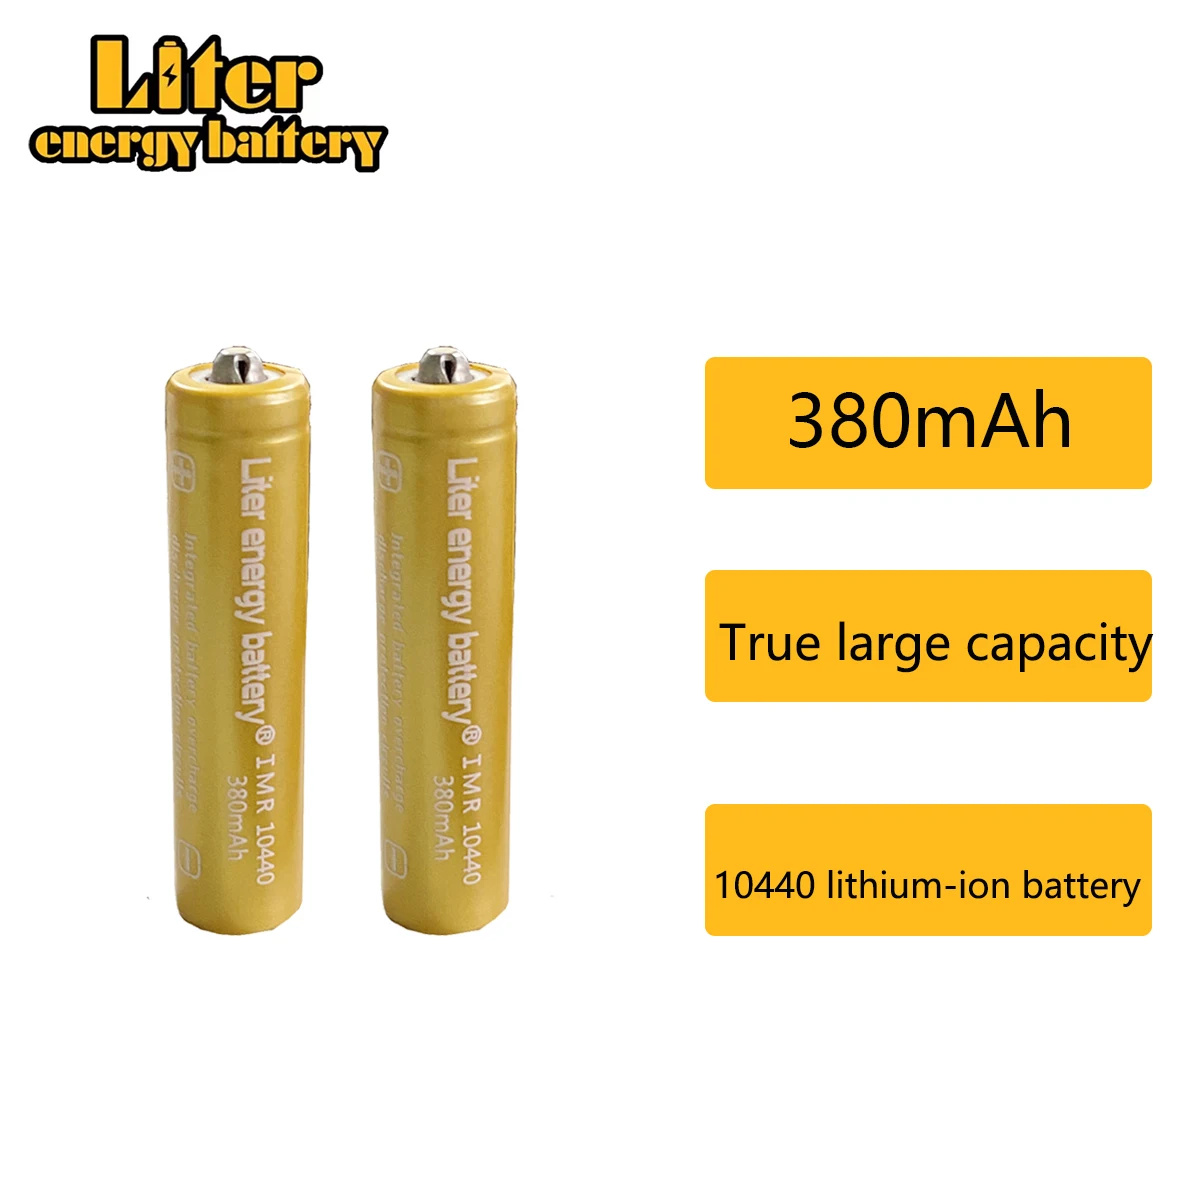 

20pcs Liter energy battery 3.7V 380mAh High Capacity 10440 Li-ion Rechargeable Battery AAA Battery for LED Flashlights Headlamps